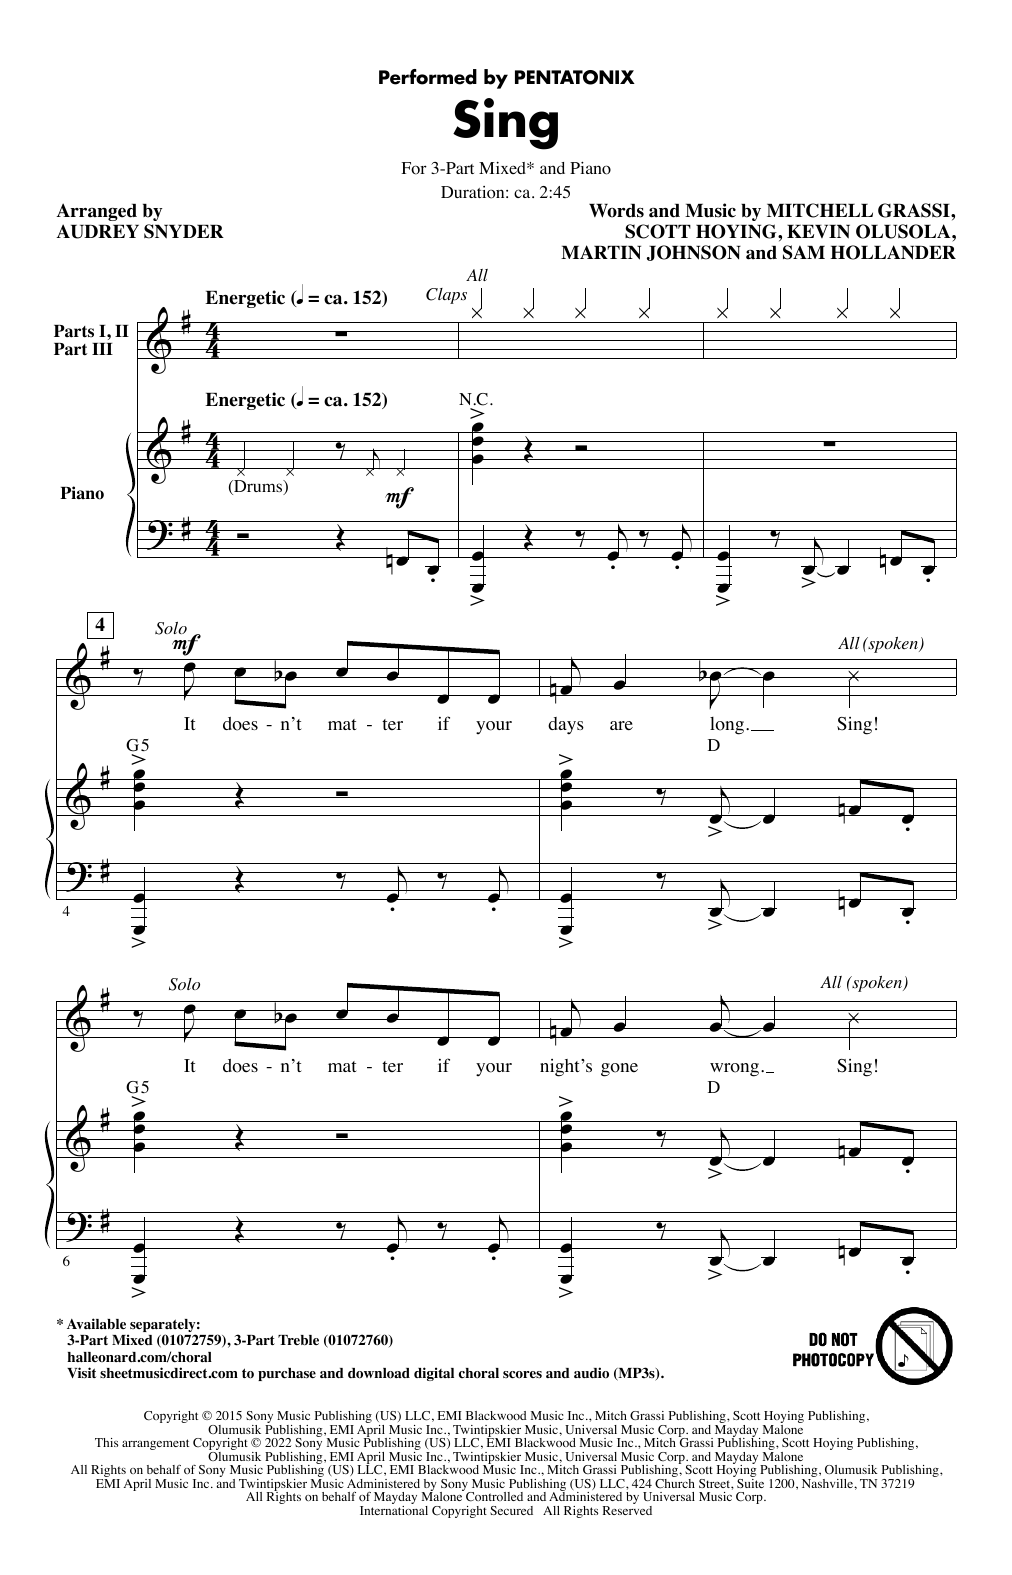 Pentatonix Sing (arr. Audrey Snyder) Sheet Music Notes & Chords for 3-Part Treble Choir - Download or Print PDF